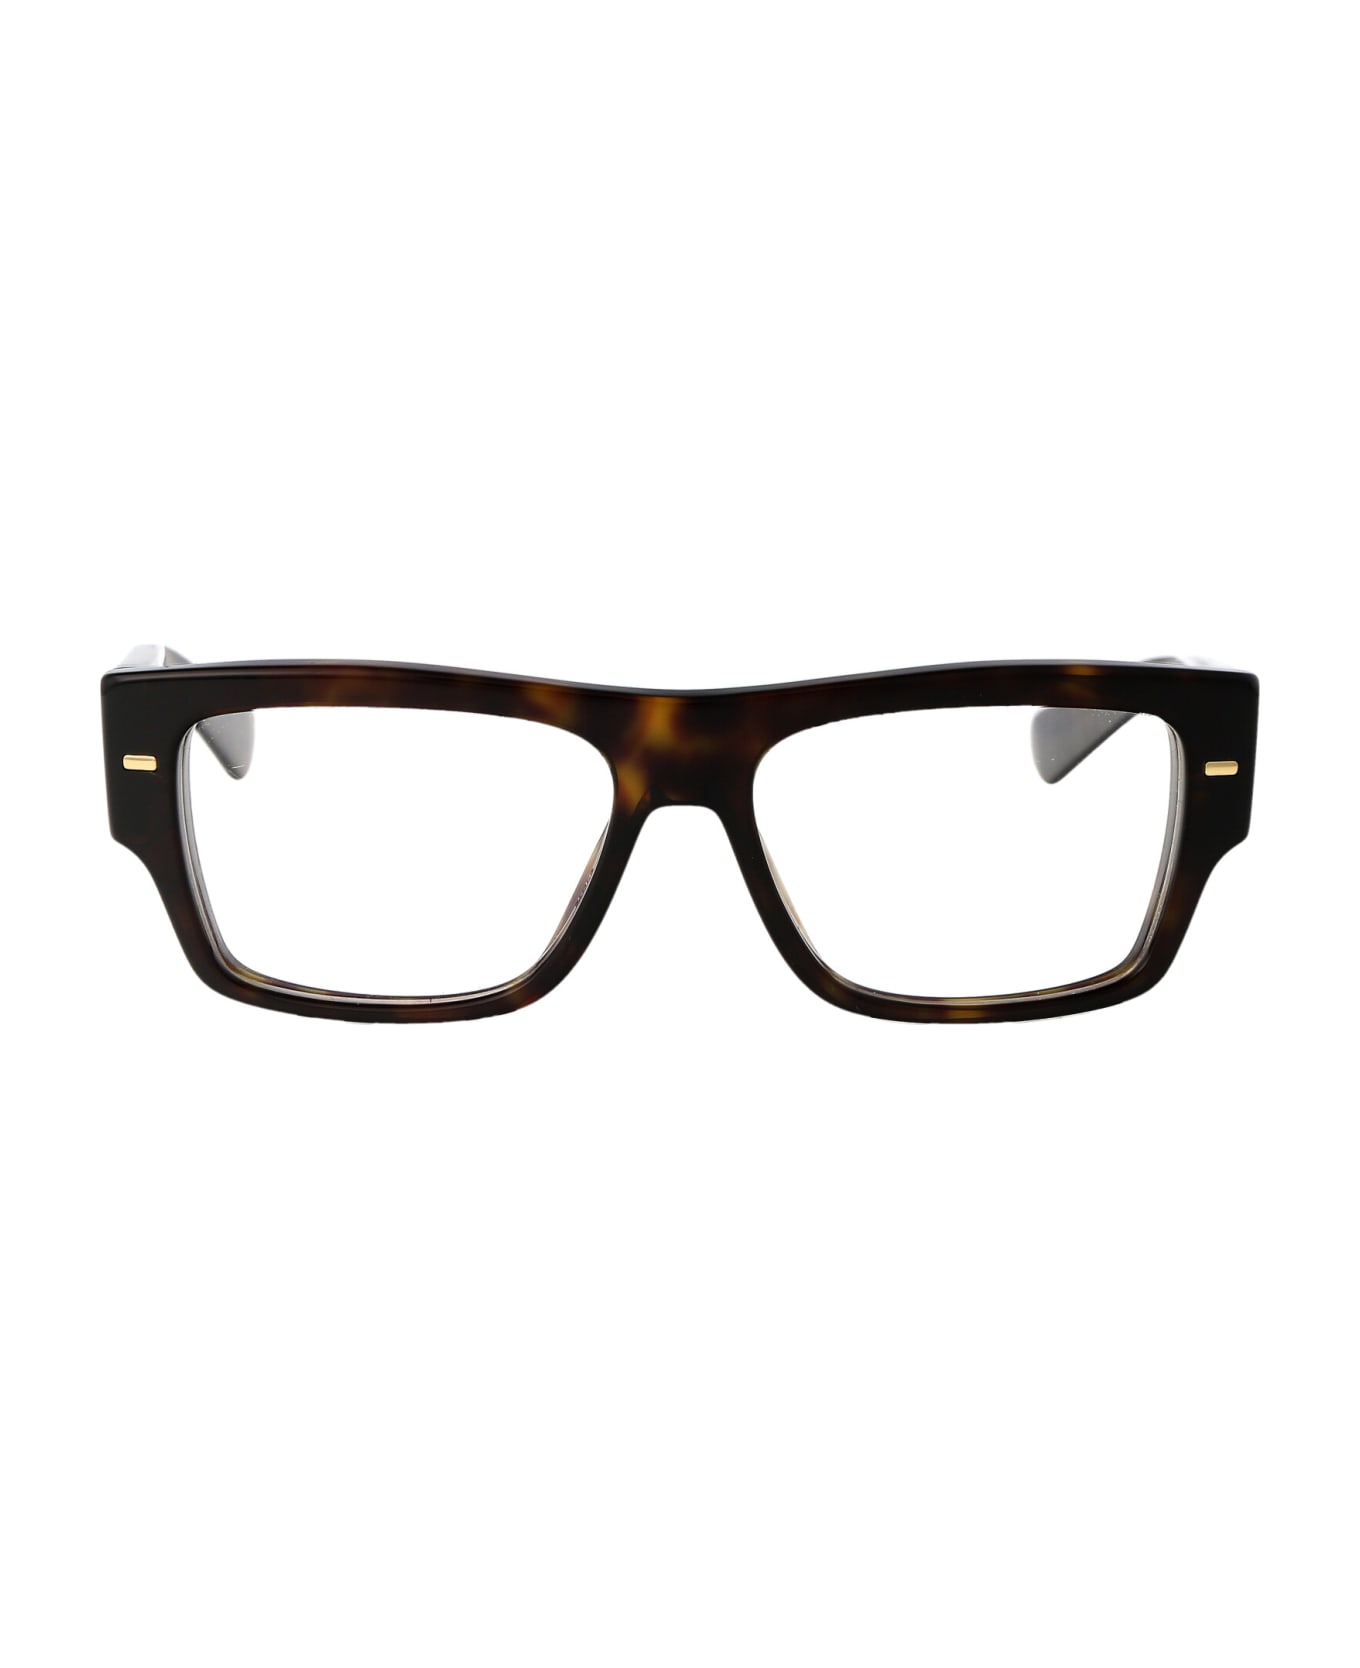 Dolce & Gabbana Eyewear 0dg3379 Glasses - 502 HAVANA アイウェア